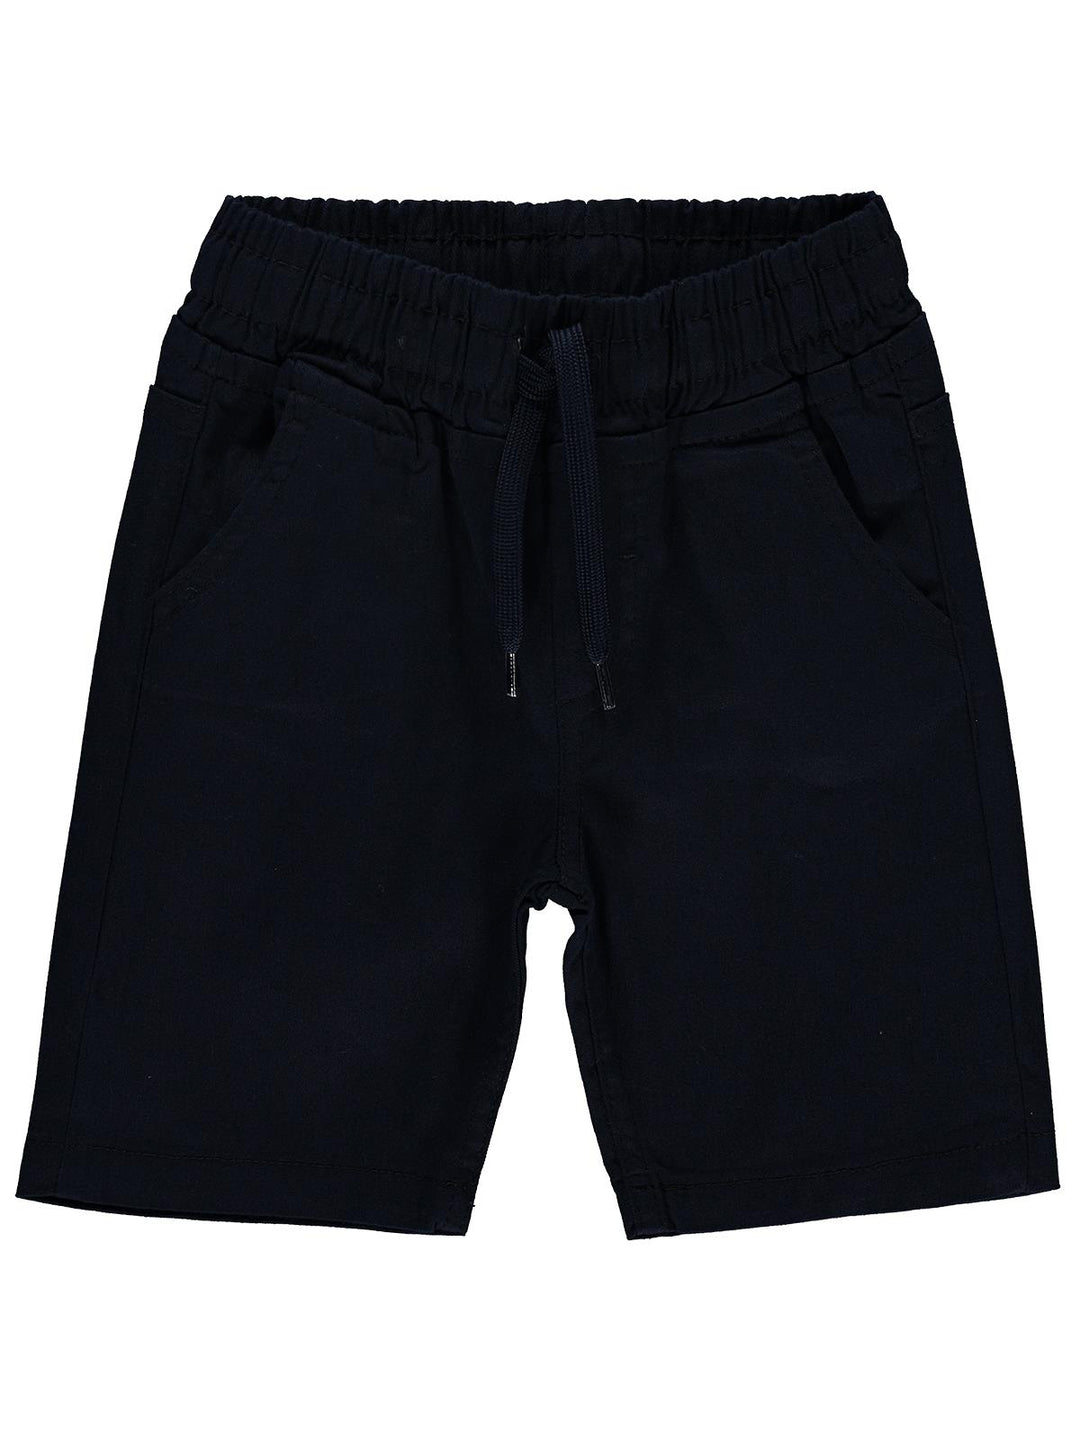 Civil Boys Cotton Long Shorts #2204-3 (S-22)